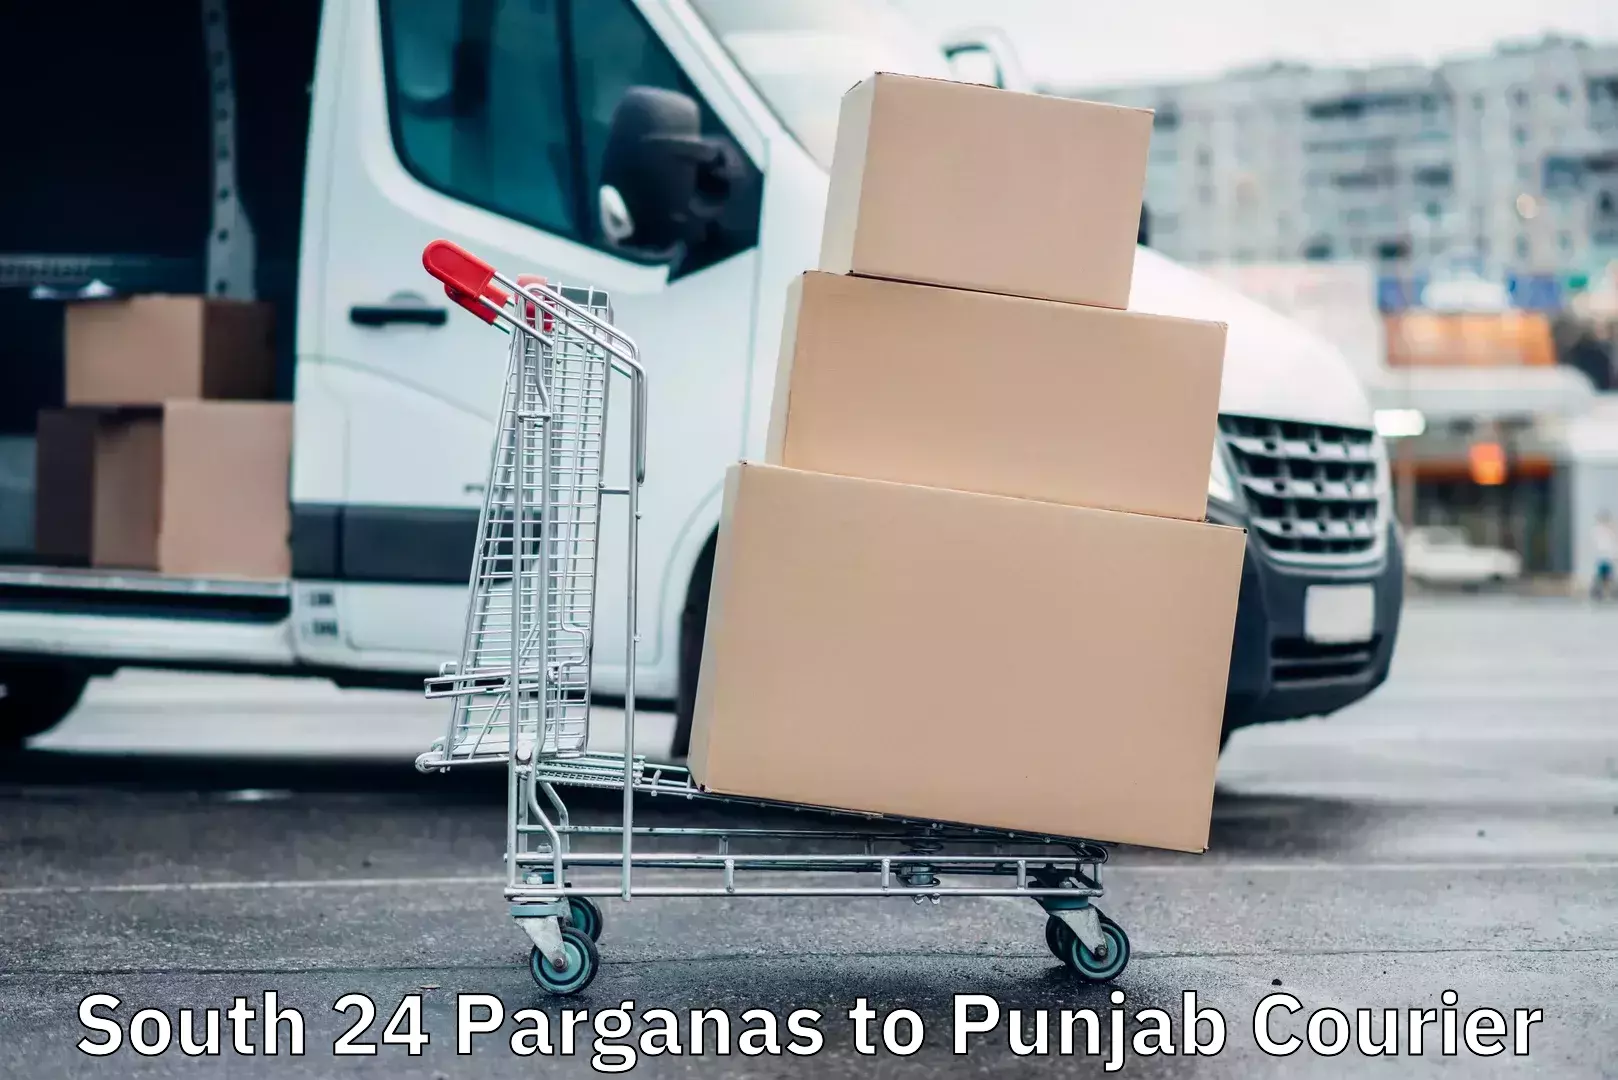 Digital courier platforms South 24 Parganas to Punjab